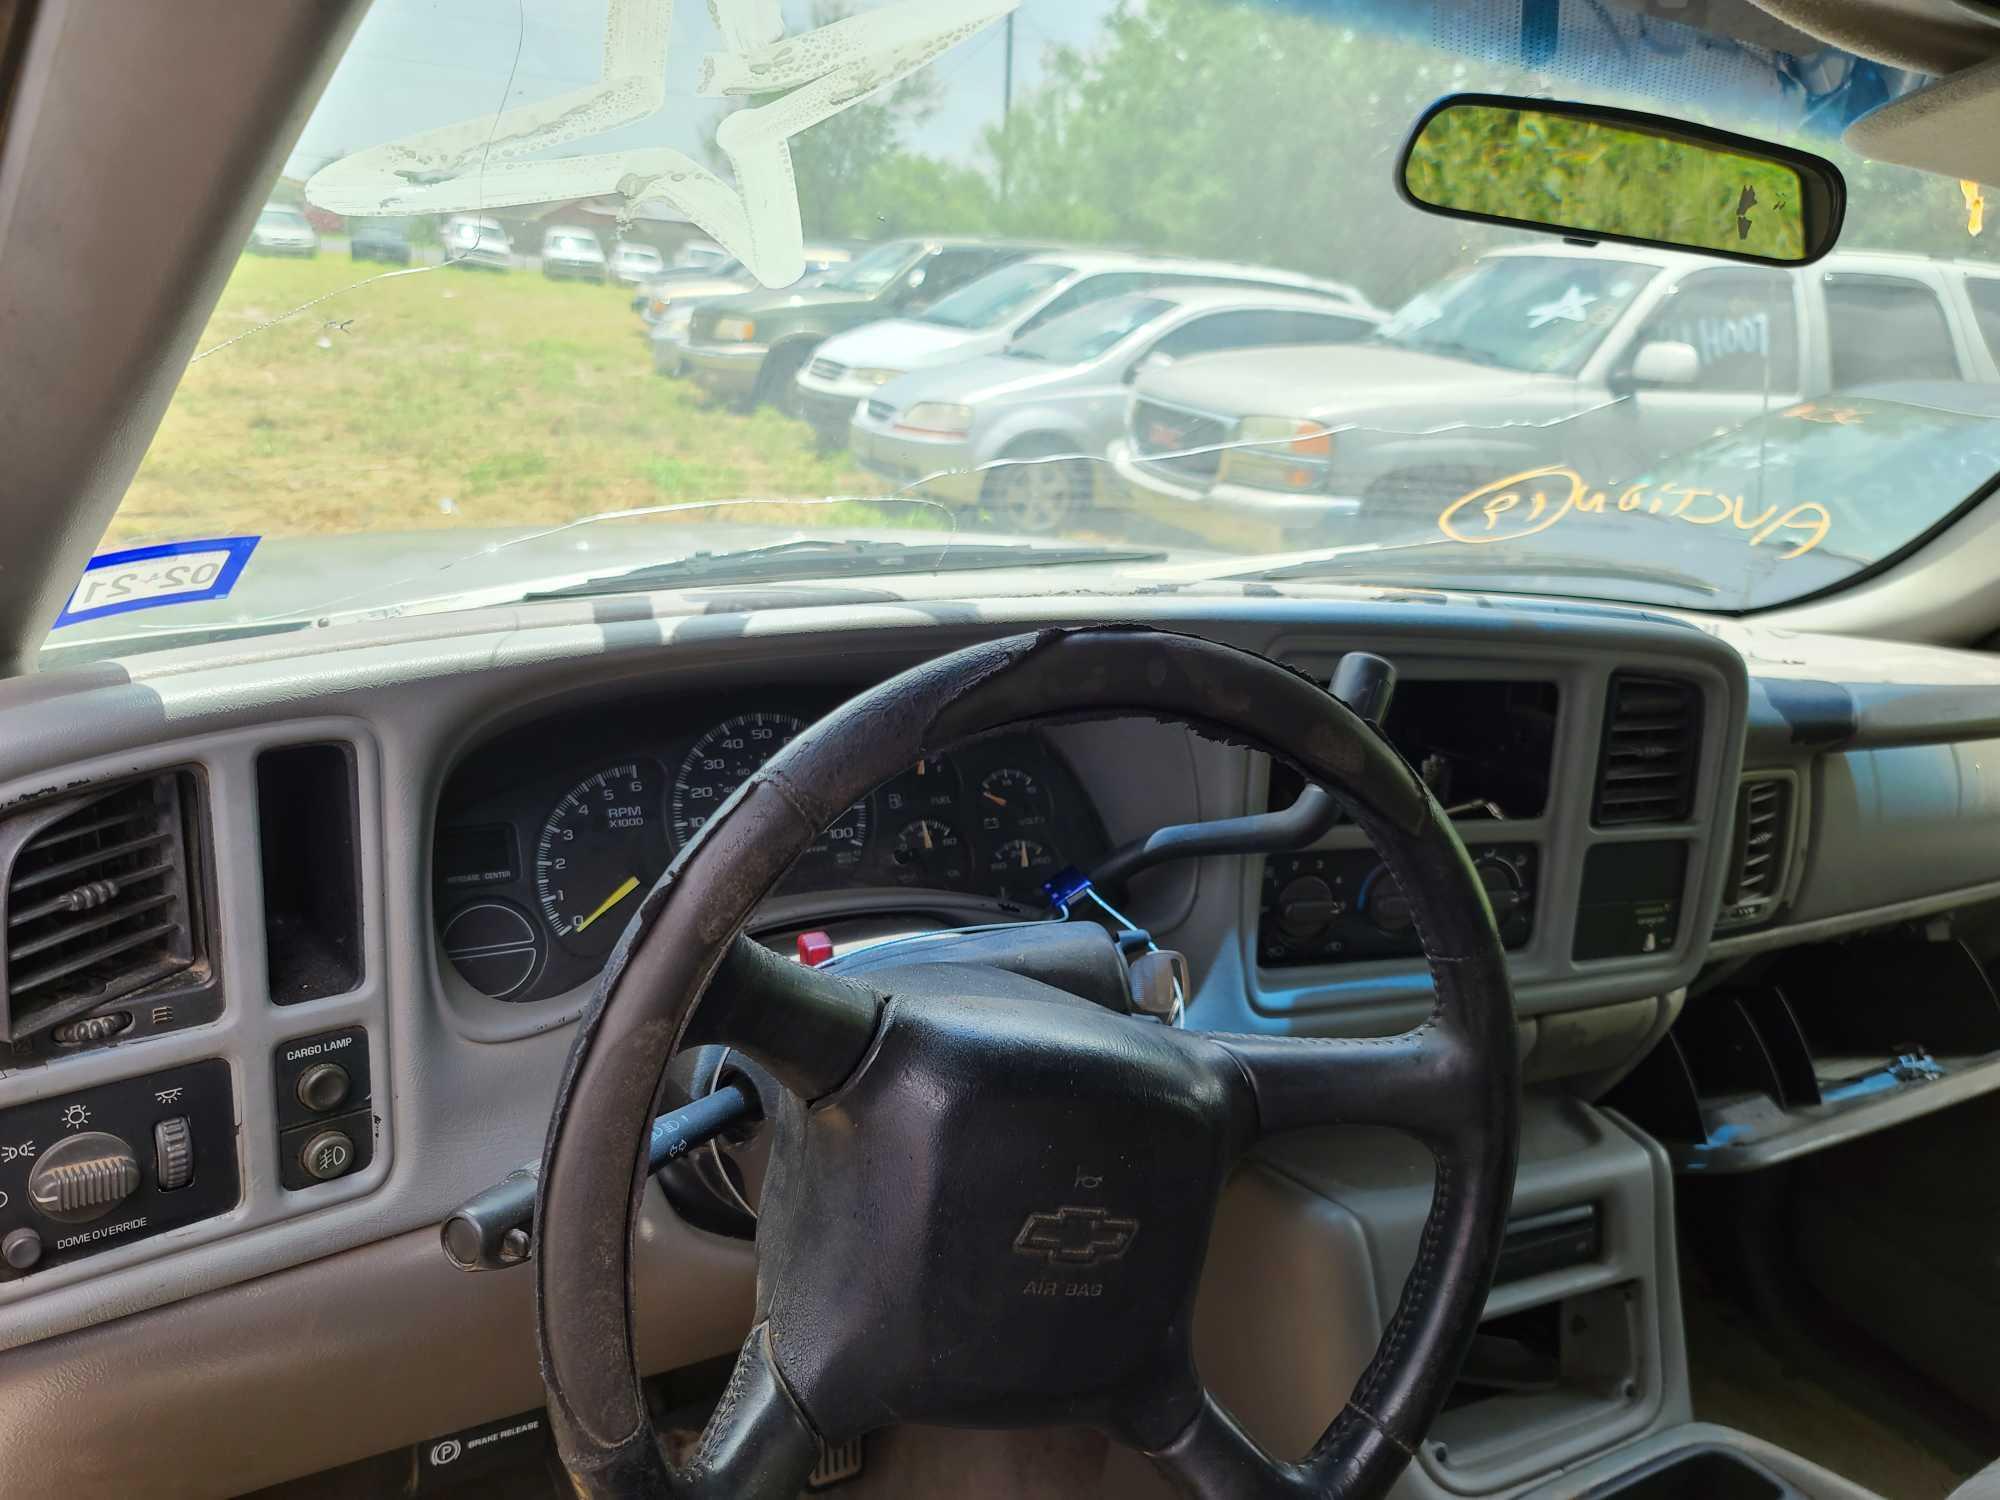 2000 Chevrolet Silverado Pickup Truck, VIN # 1GCEC19T4YZ147445